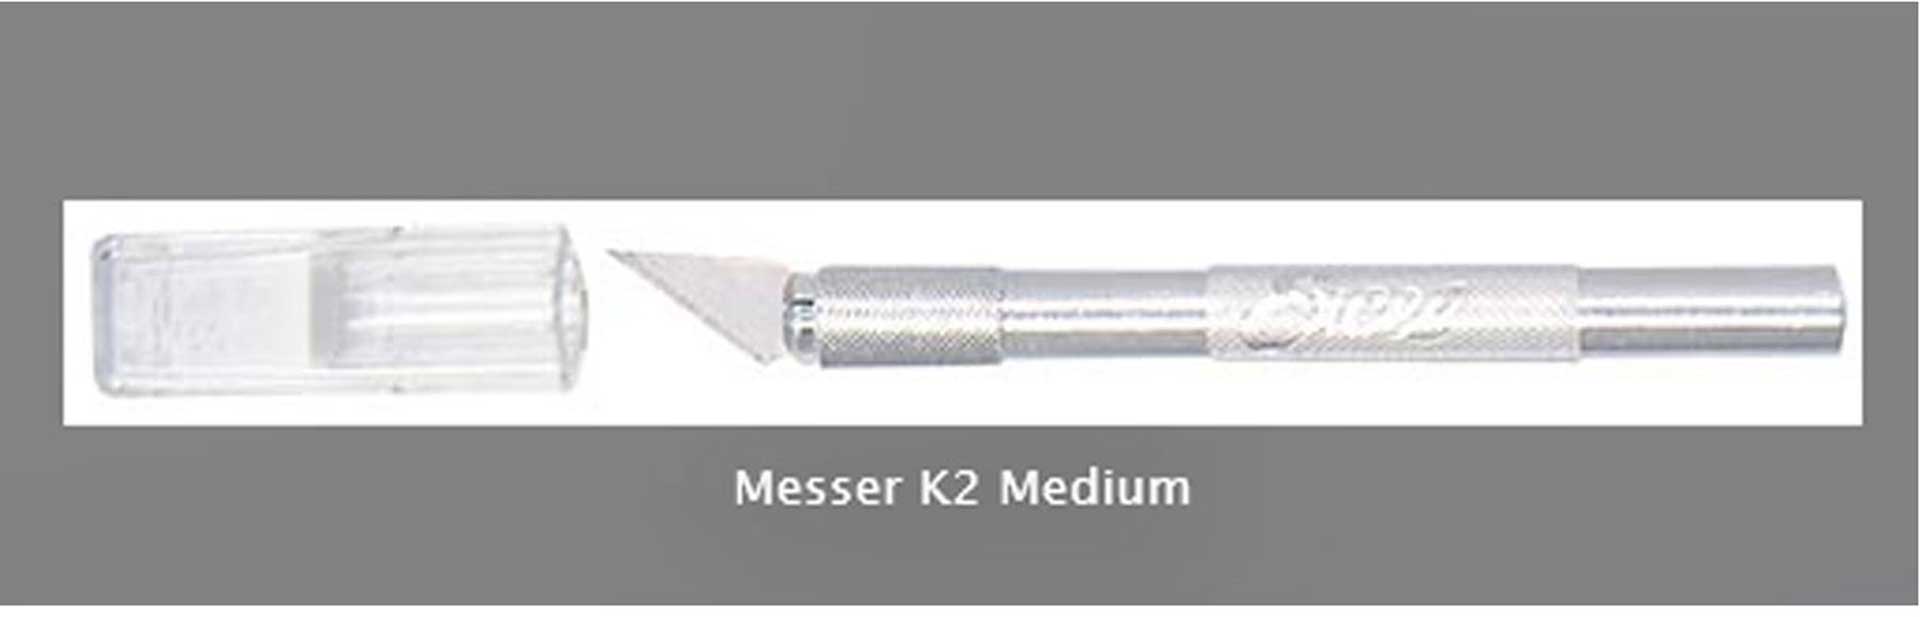 EXCEL KNIFE K2 MEDIUM PRECISION KNIFE